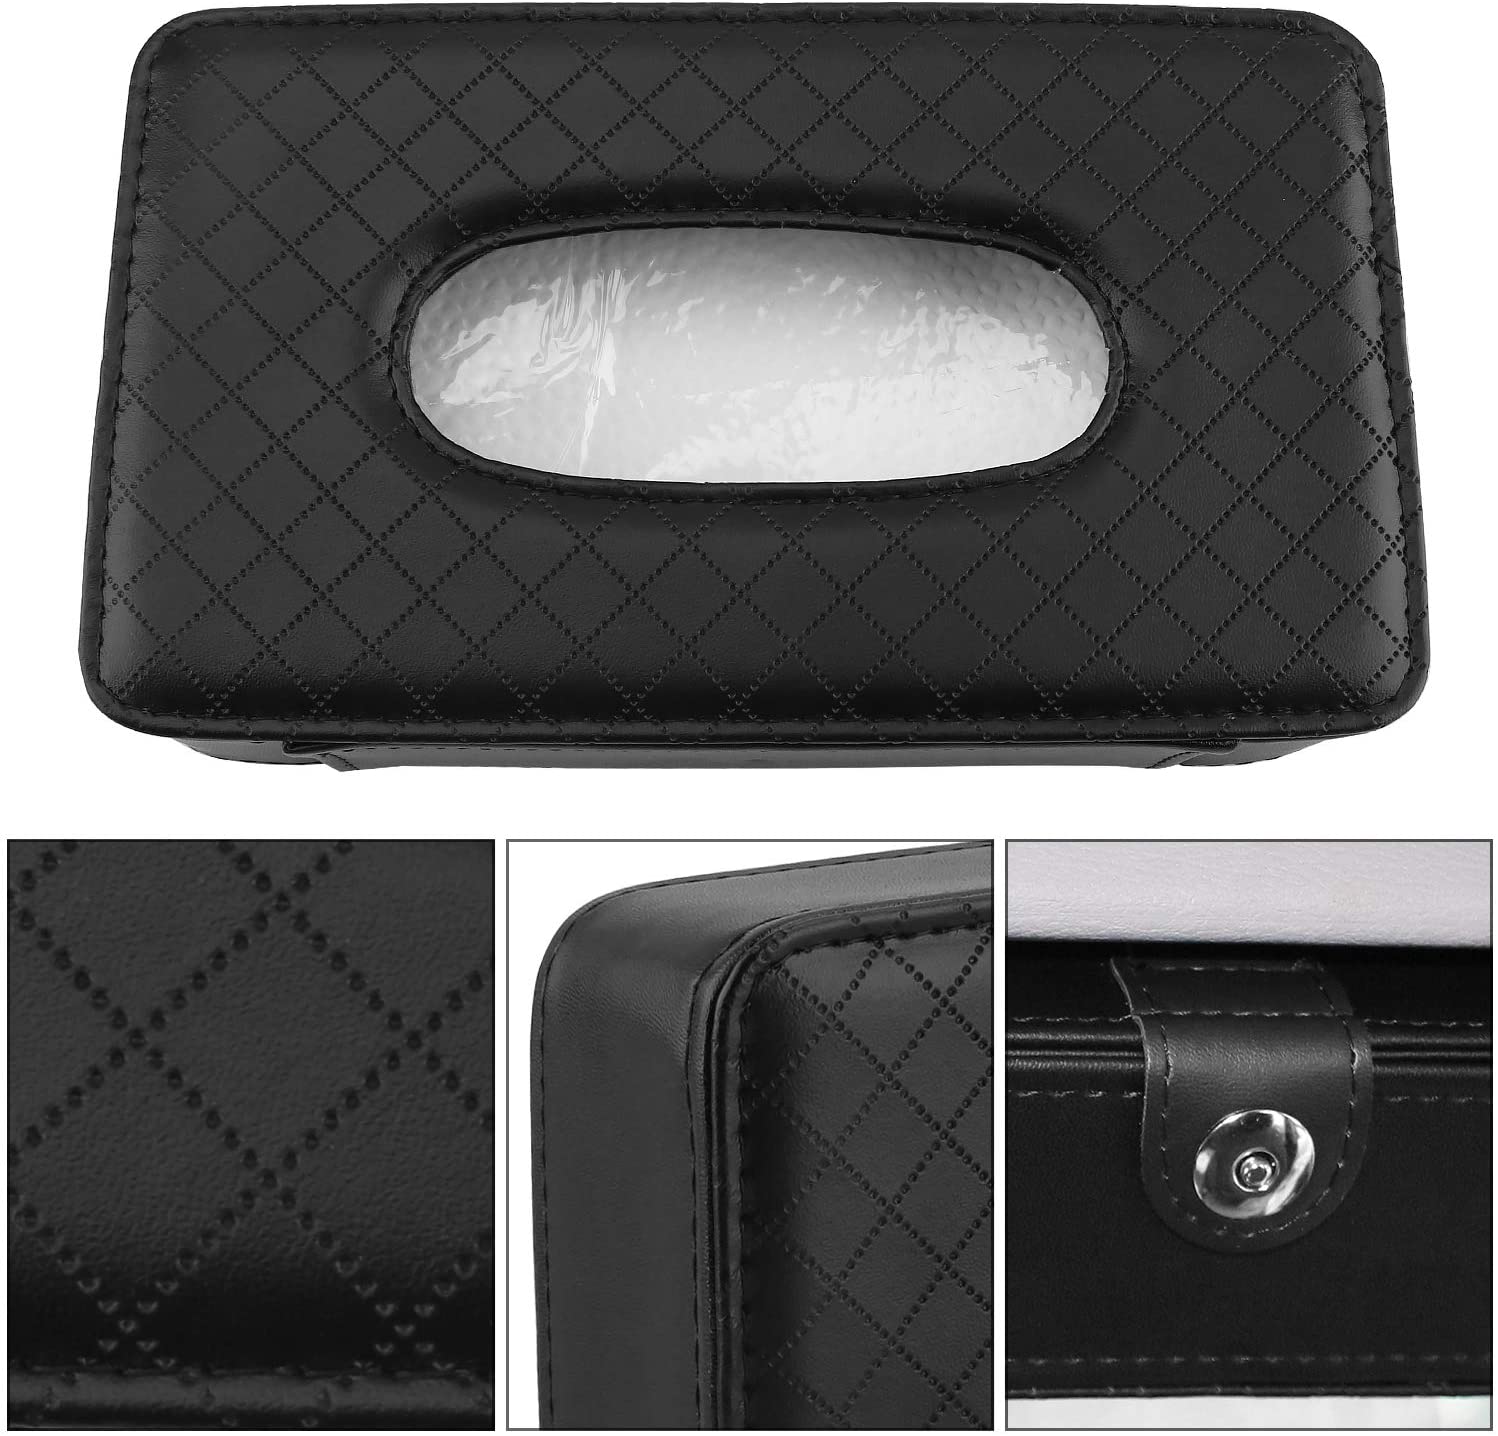 Black PU Leather Auto Tissue Box Holder Cover For Car Interior